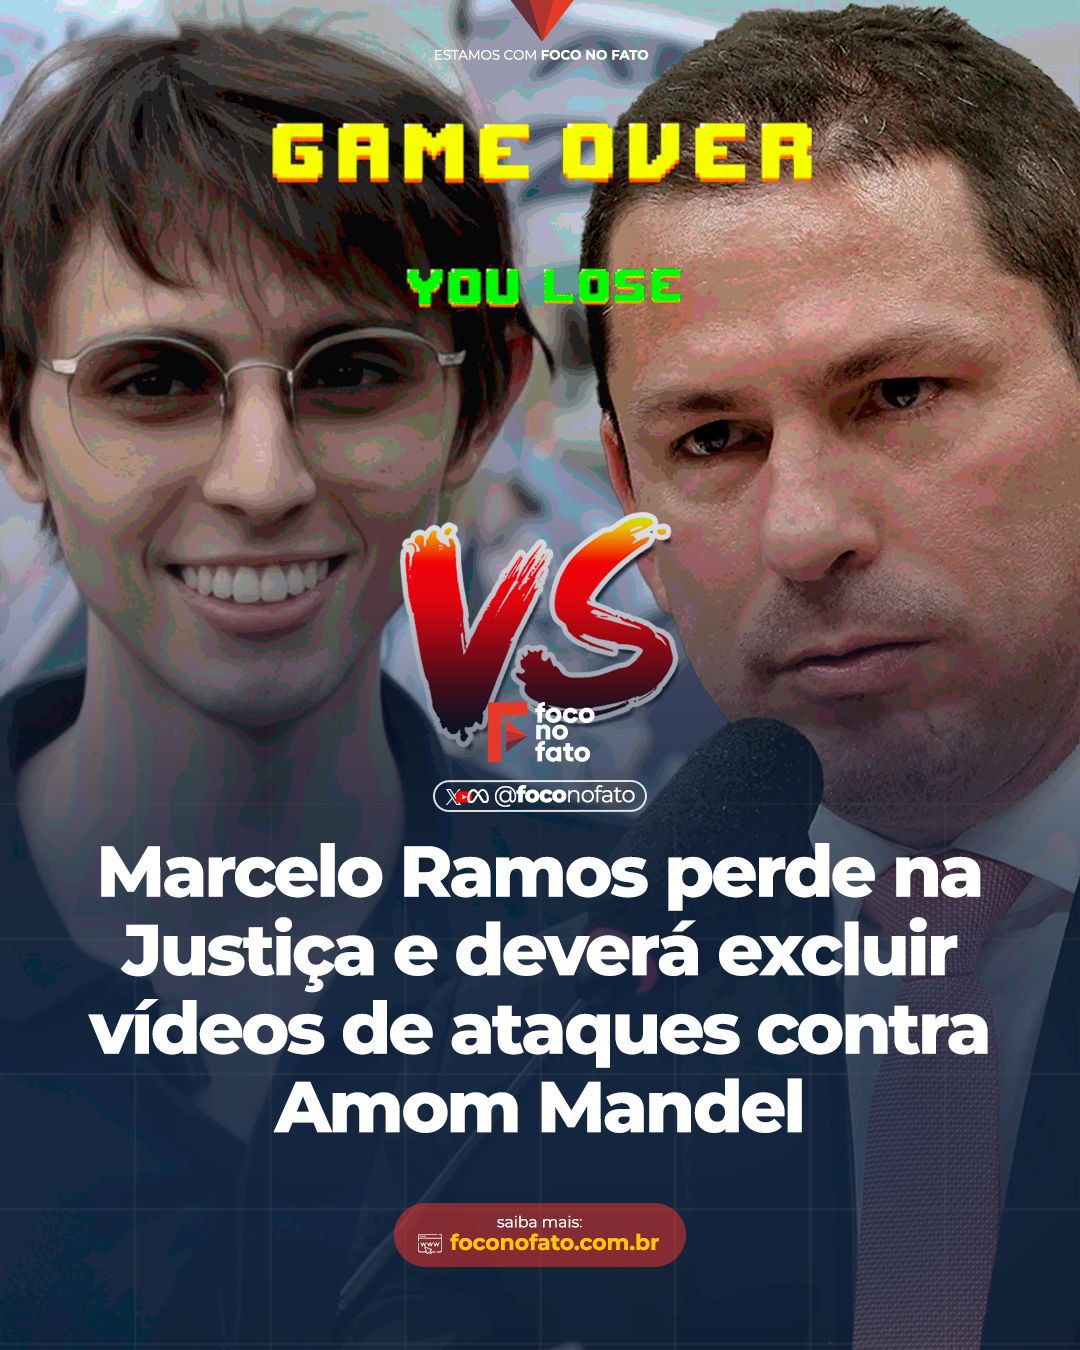 Marcelo Ramos perde na Justiça após vídeos de ataque contra Amom